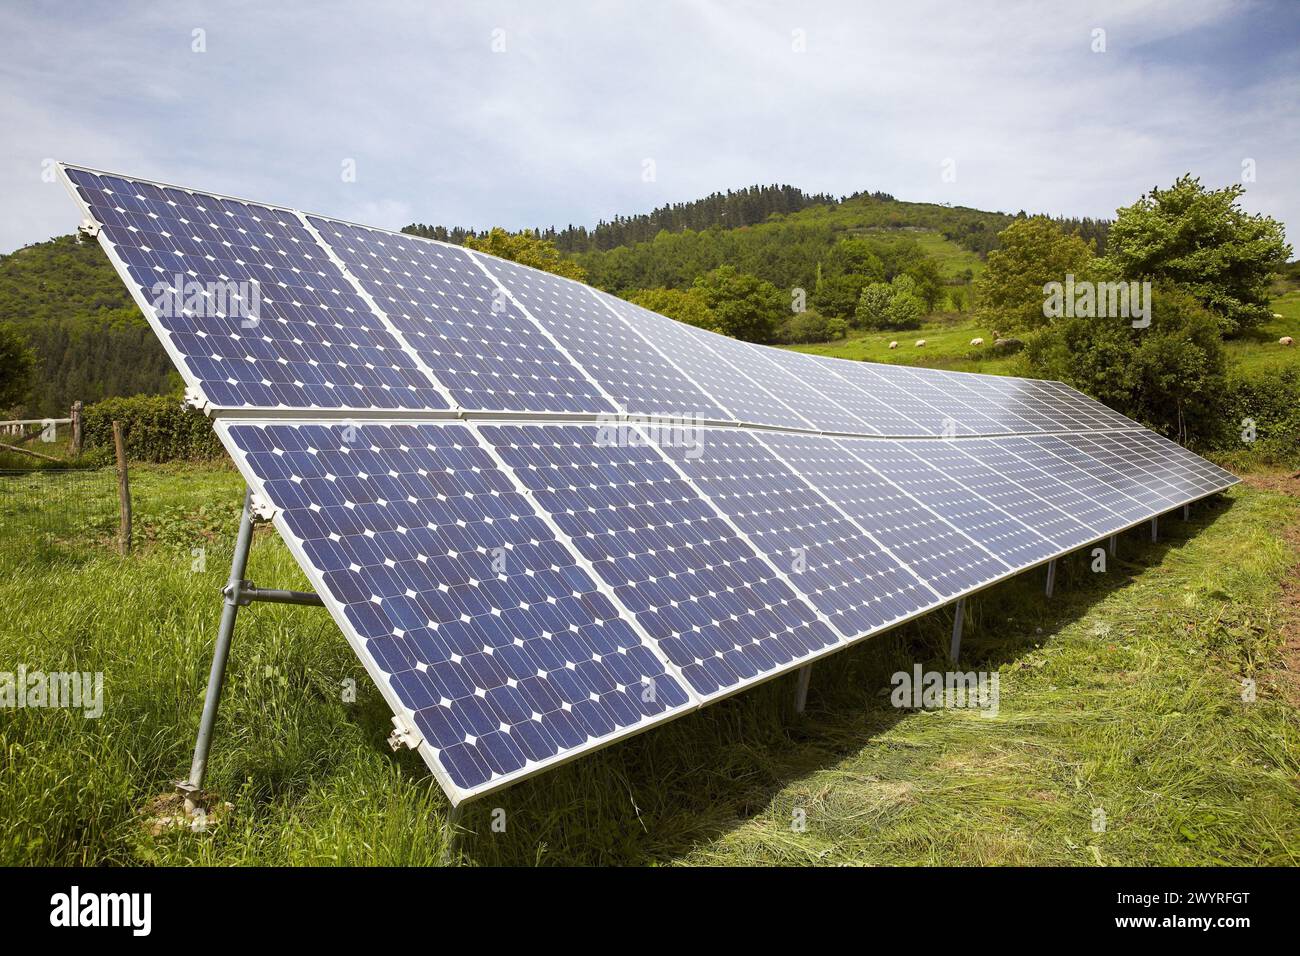 Solar panels, Beizama, Guipuzcoa, Basque Country, Spain. Stock Photo